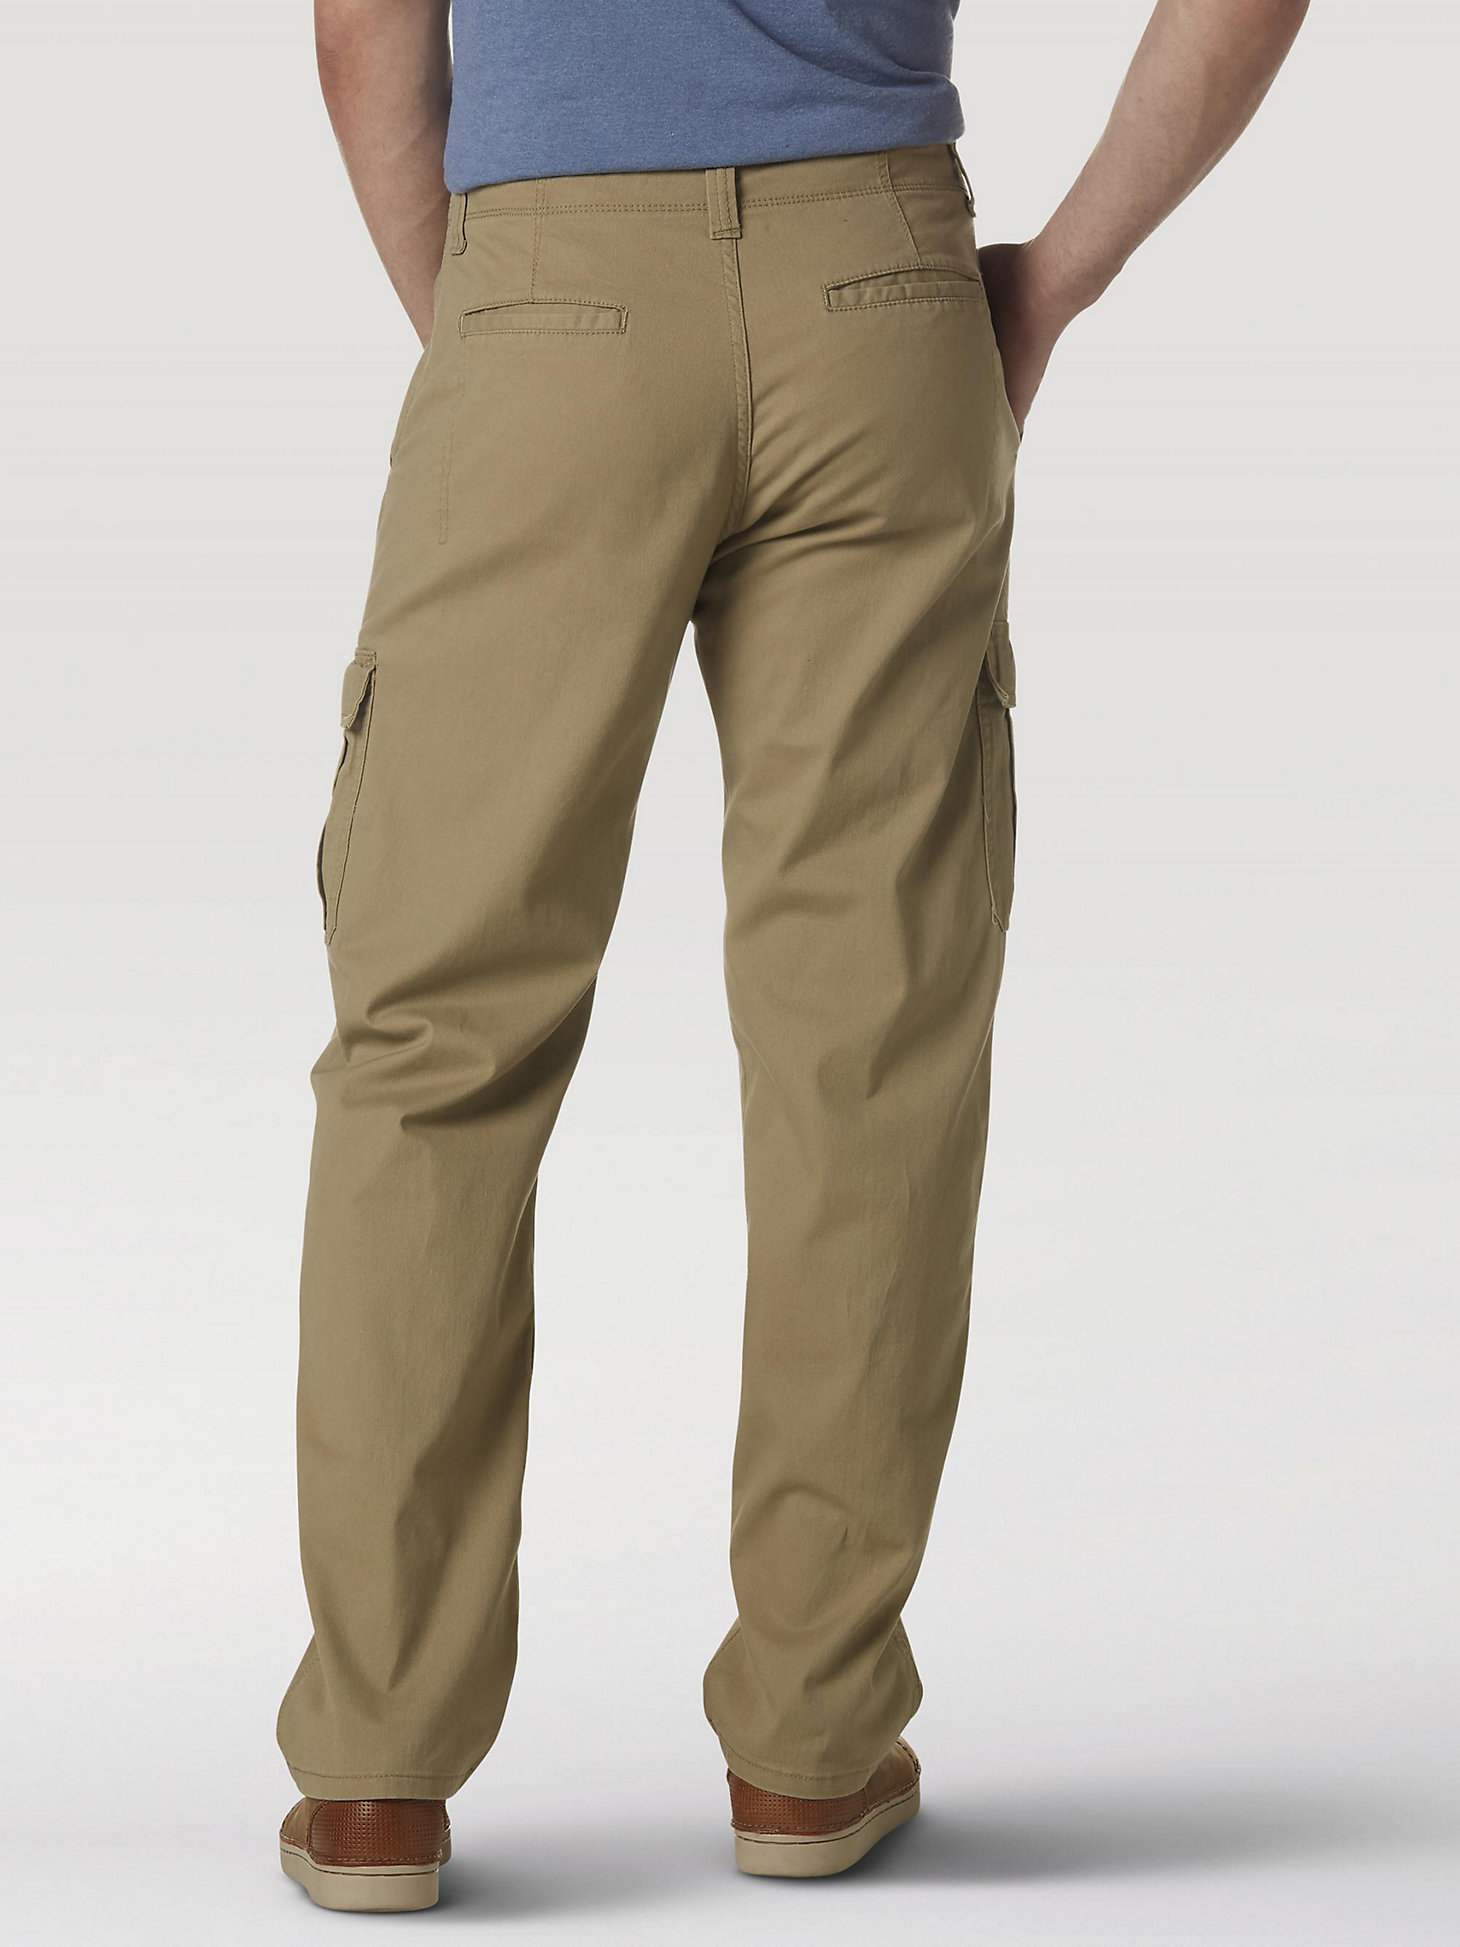 Brown 44                  EU discount 94% URBAN slacks MEN FASHION Trousers Casual 